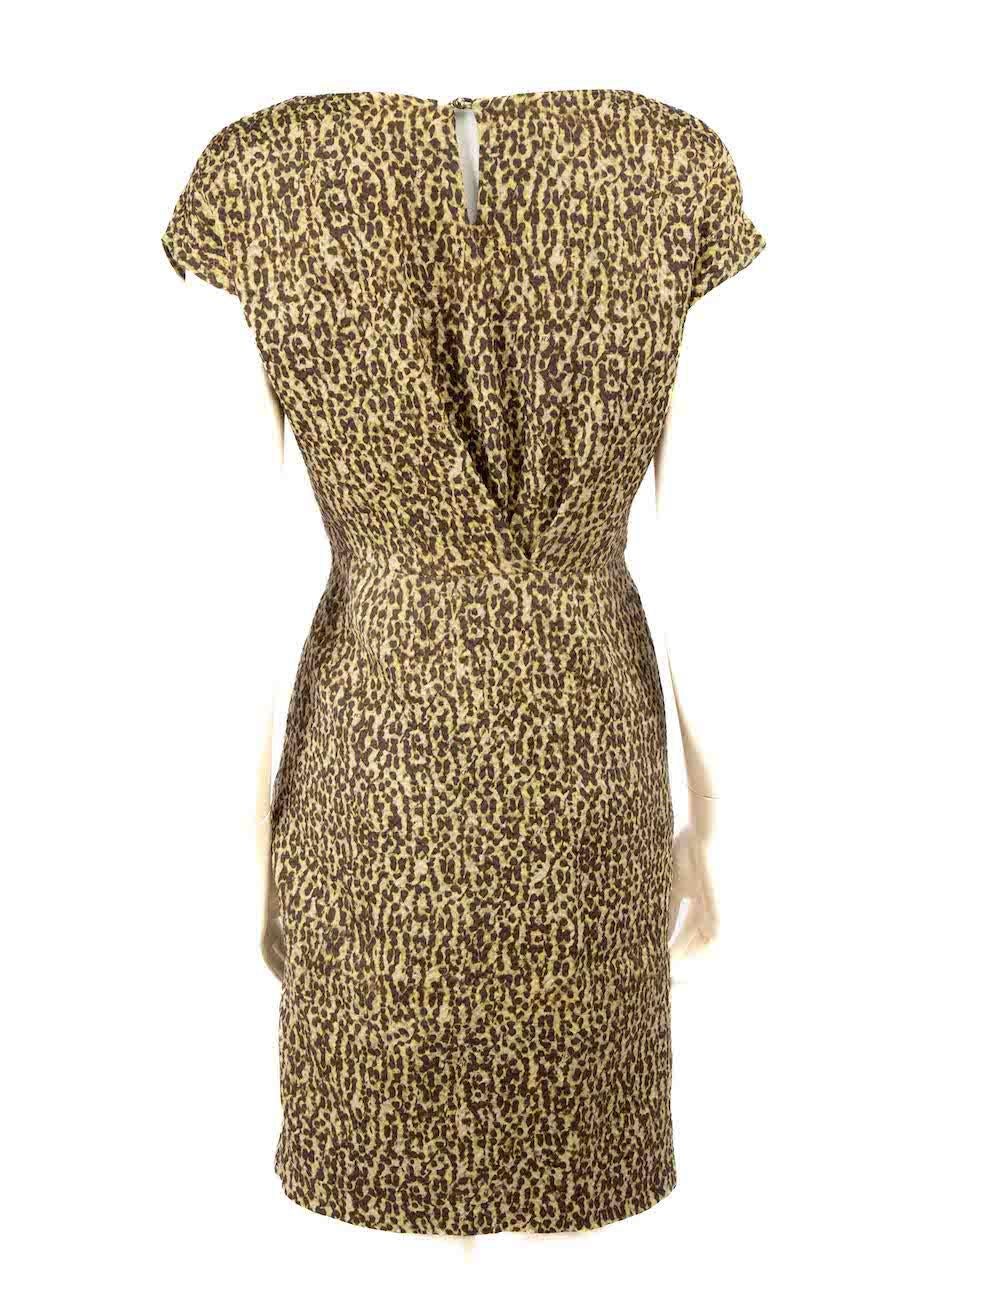 Carolina Herrera Leopard Wool Knee Length Dress Size S In Good Condition For Sale In London, GB